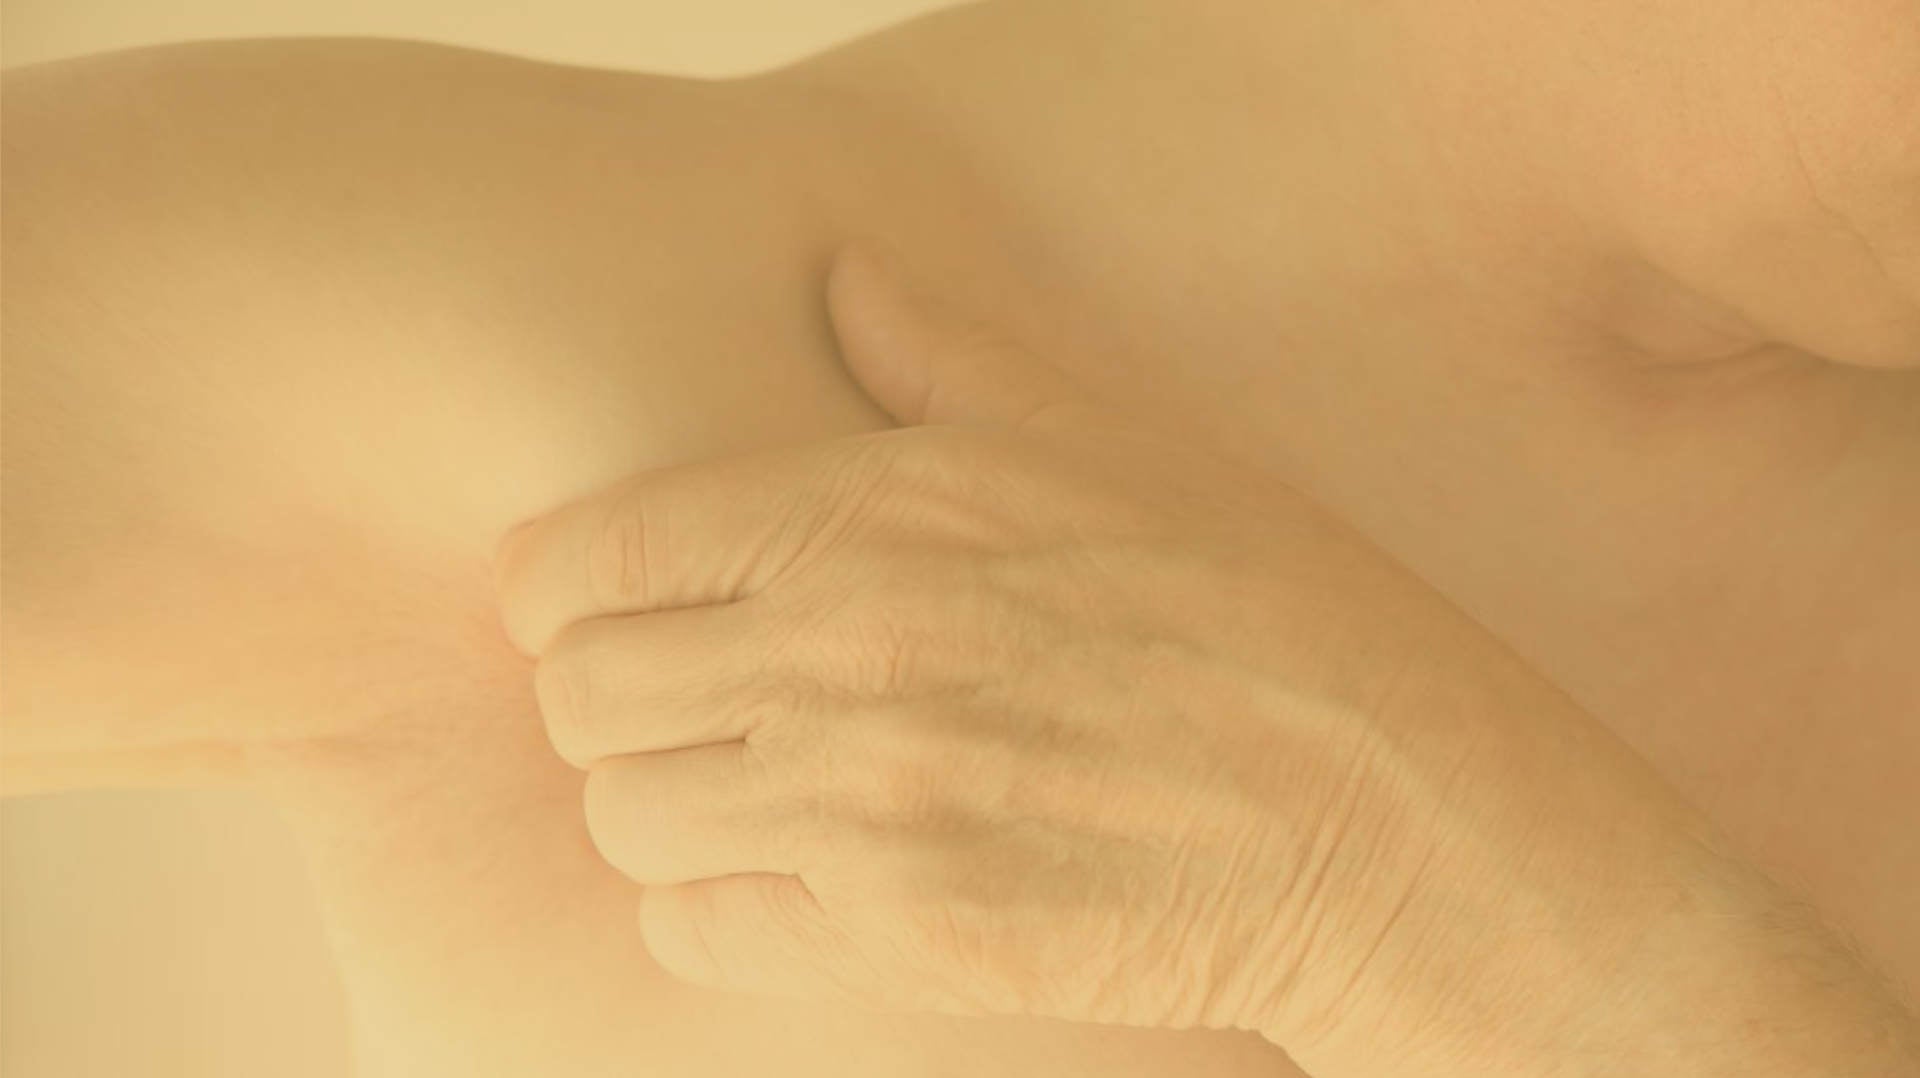 Armpit irritation - why does it happen?